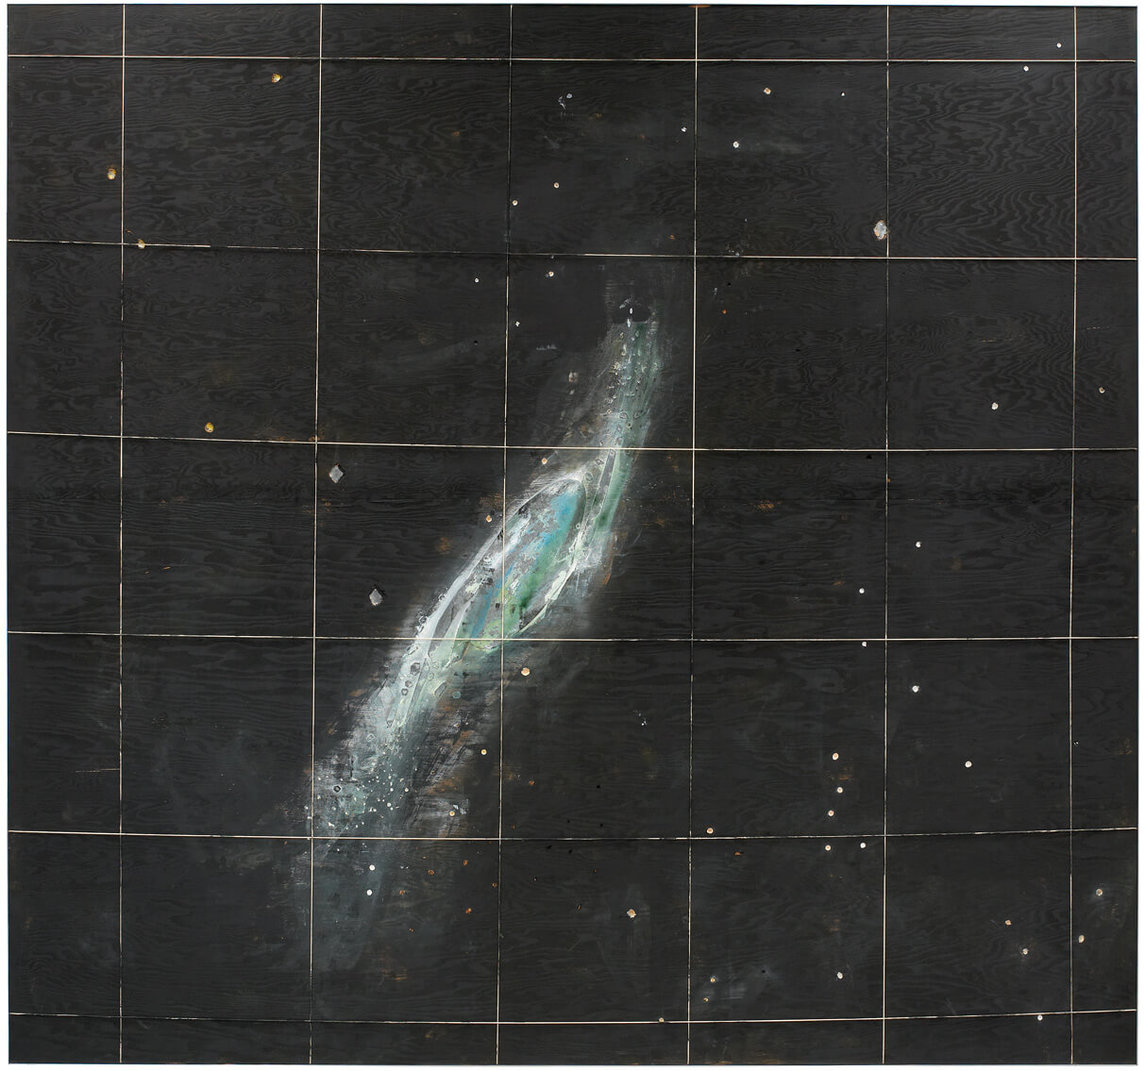 Paterson Ewen, Galaxy NGC-253 (Galaxie NGC-253), 1973